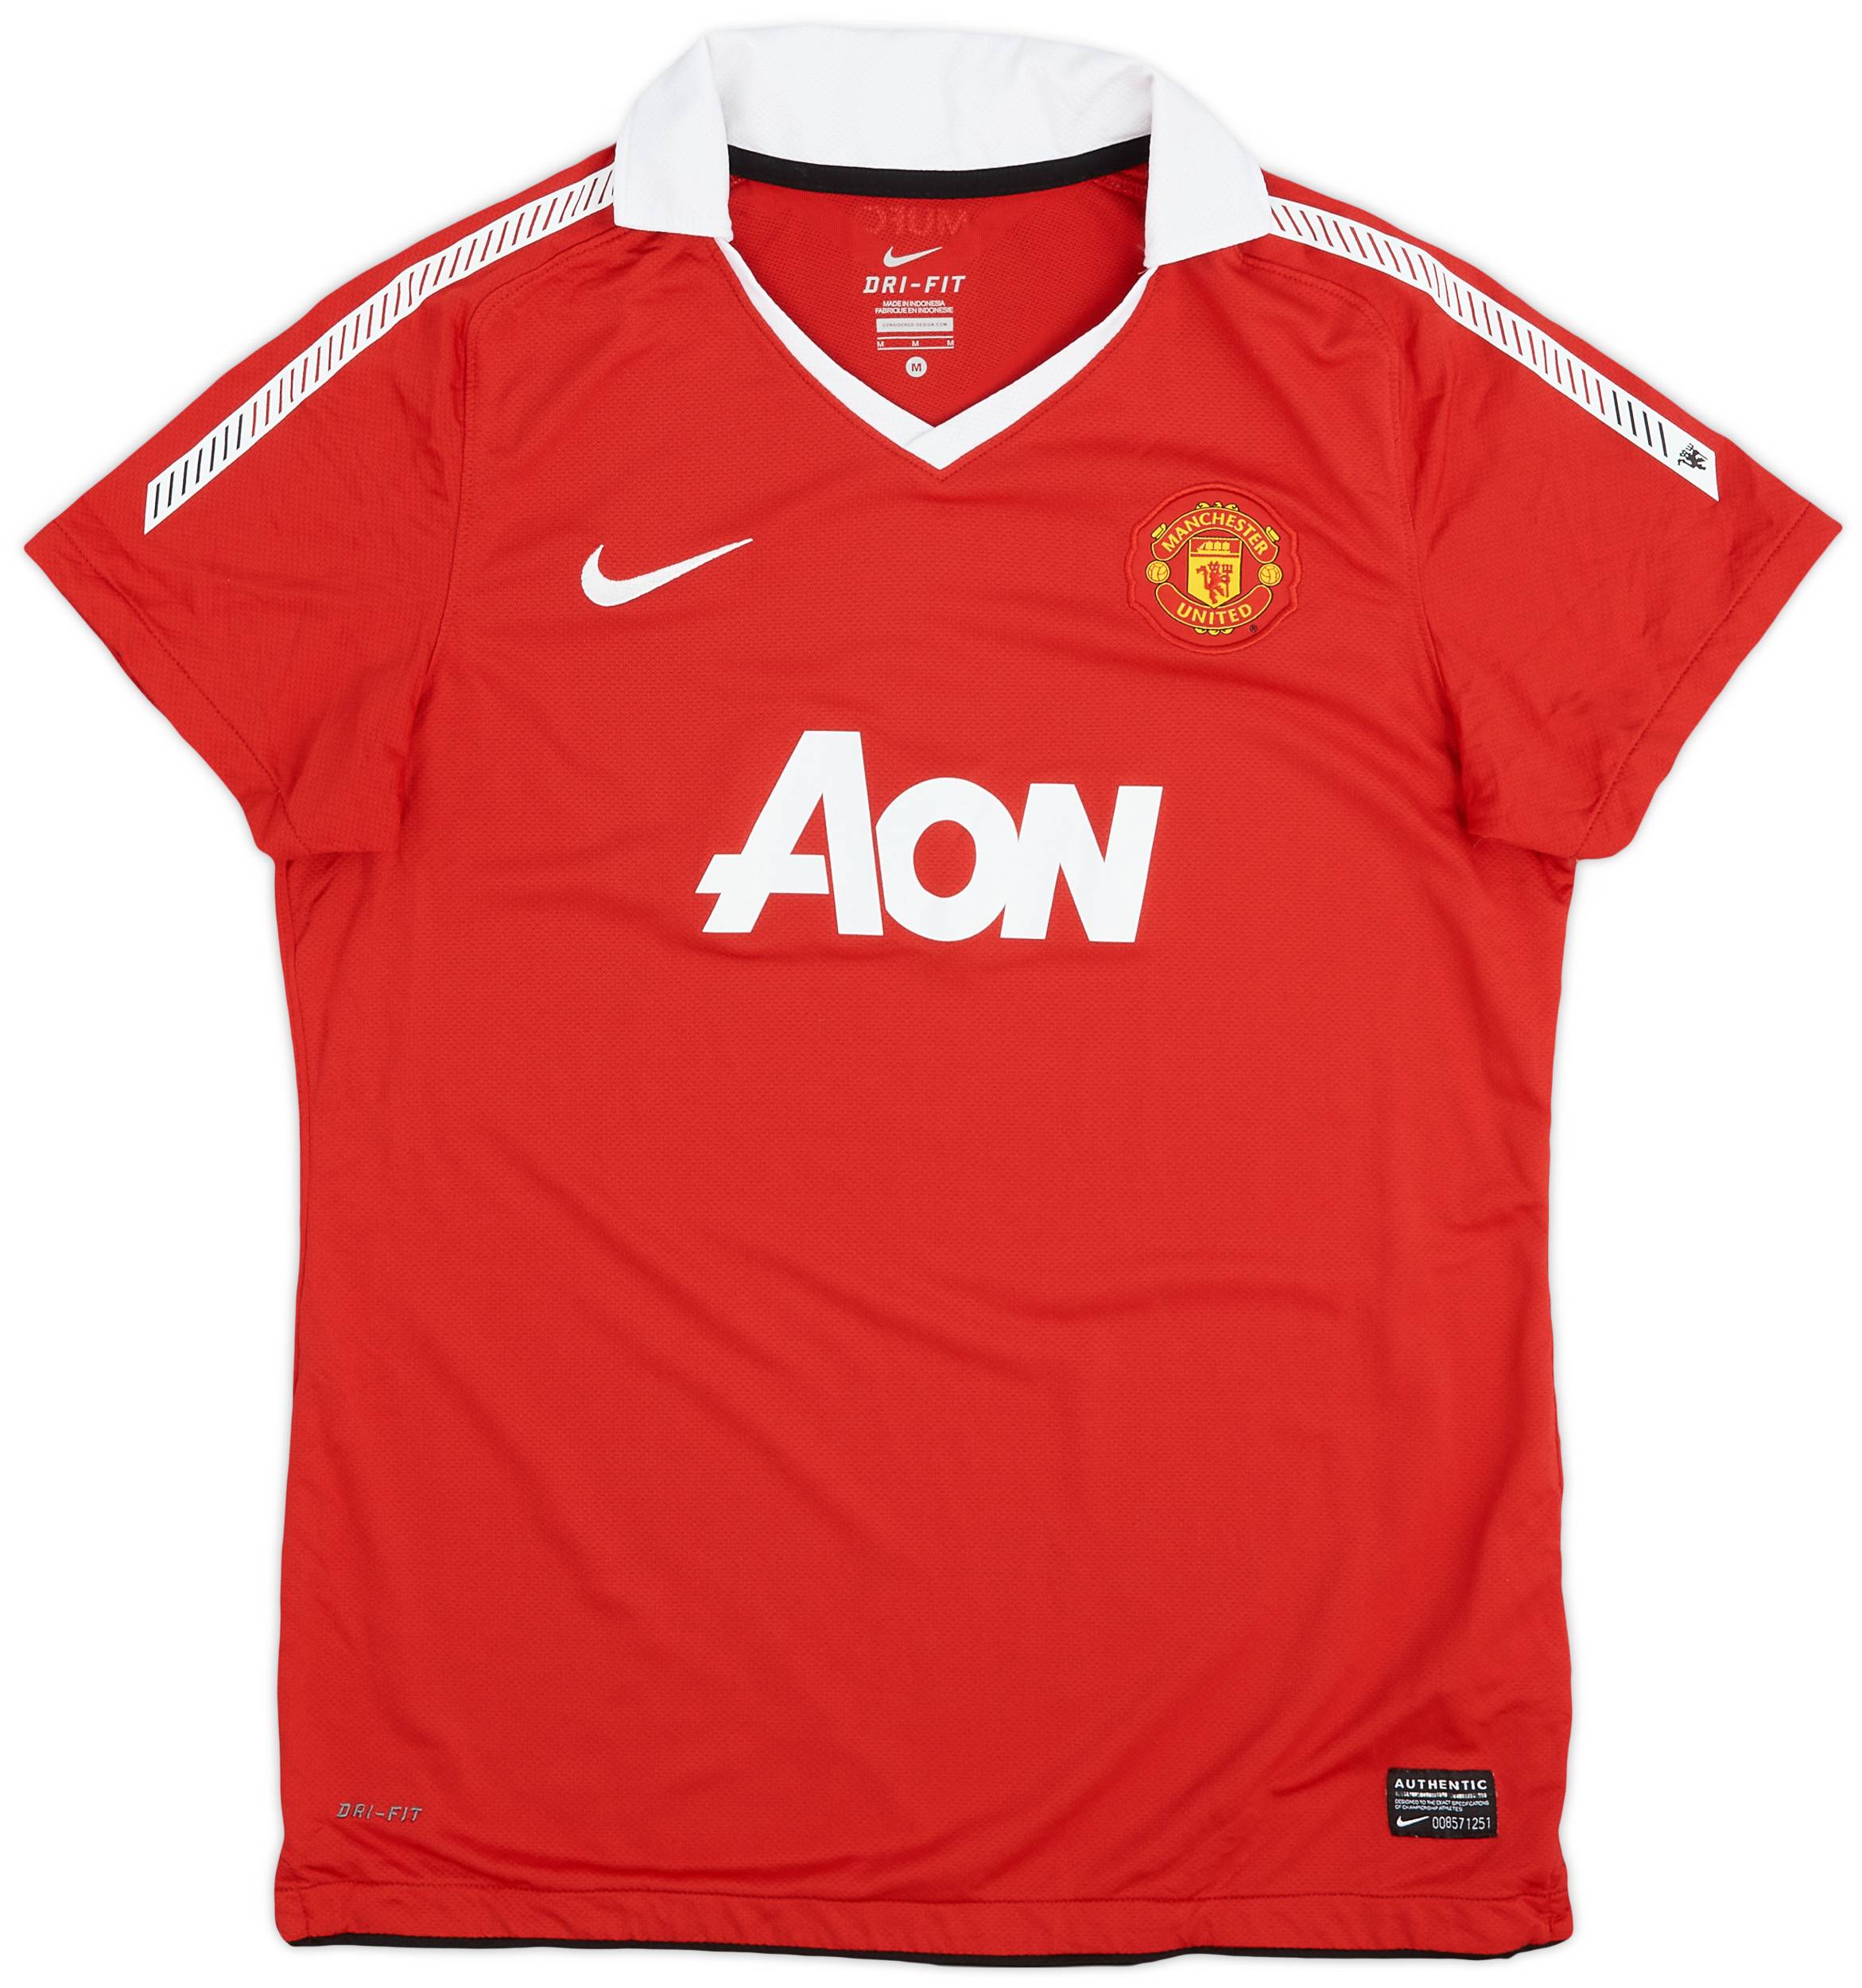 2010-11 Manchester United Home Shirt - 9/10 - (Women's M)